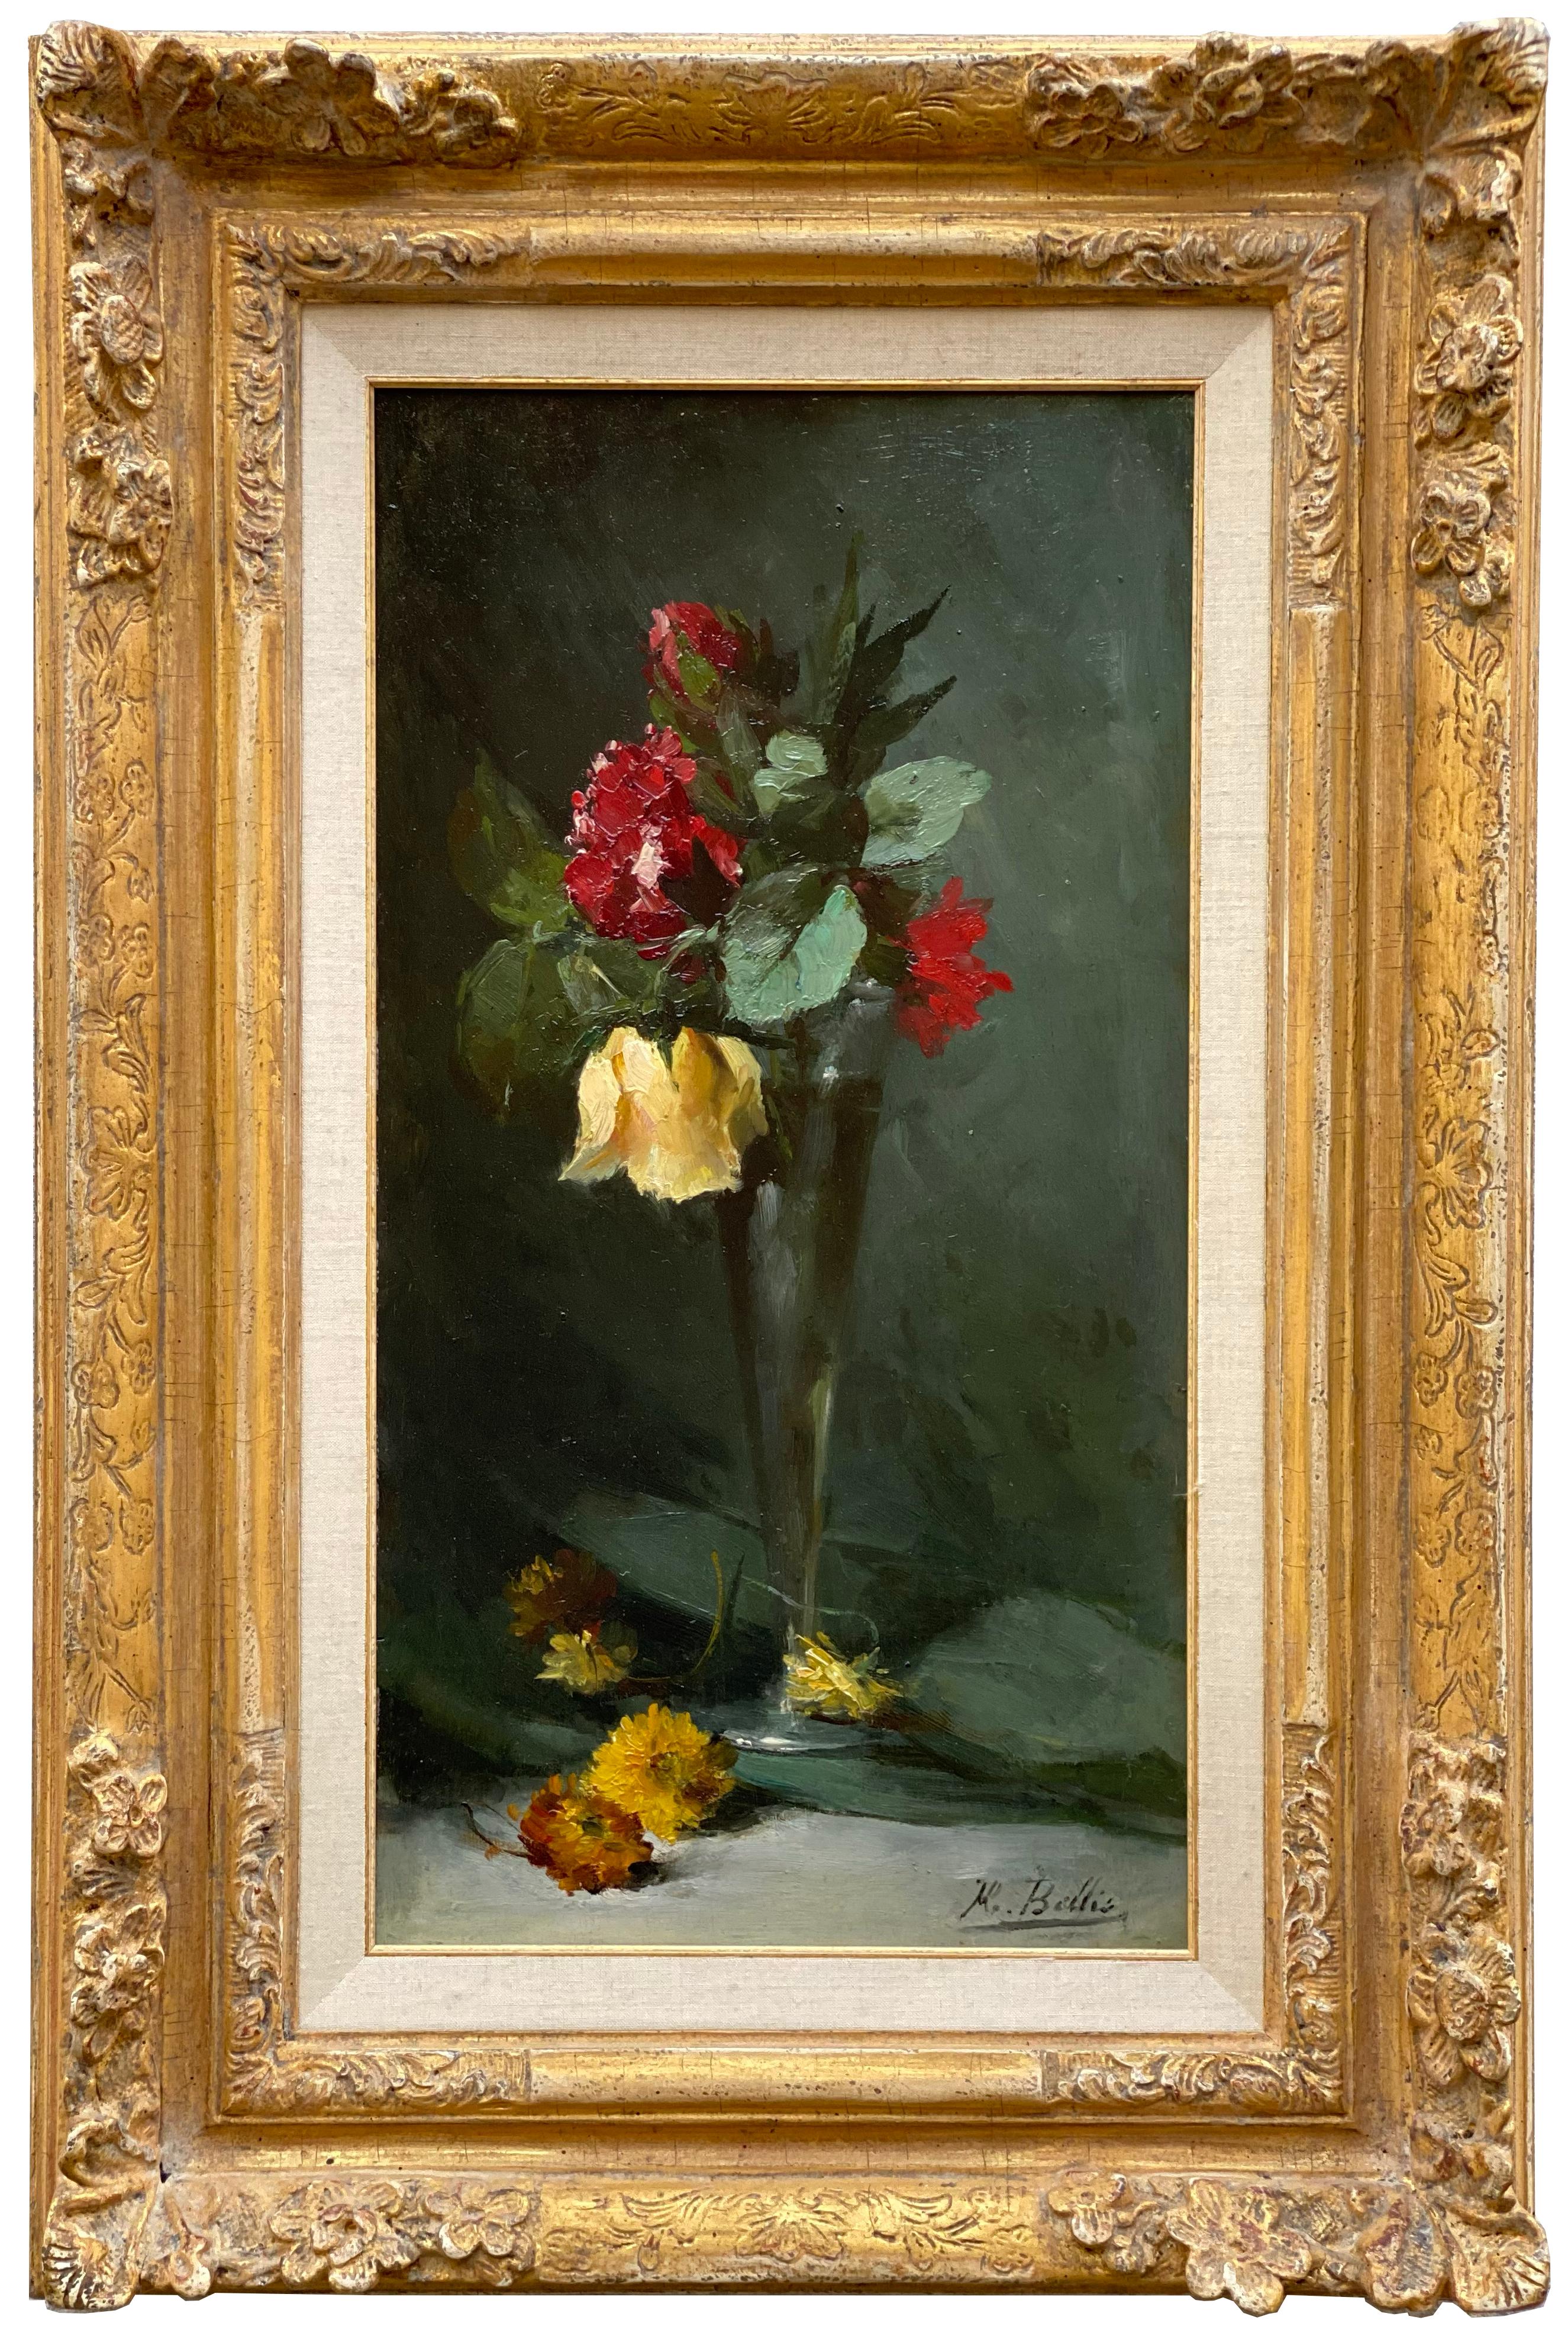 HUBERT BELLIS Figurative Painting -   Hubert Bellis, Brussels 1831 – 1902, Belgian Painter, 'Red and Yellow Roses'